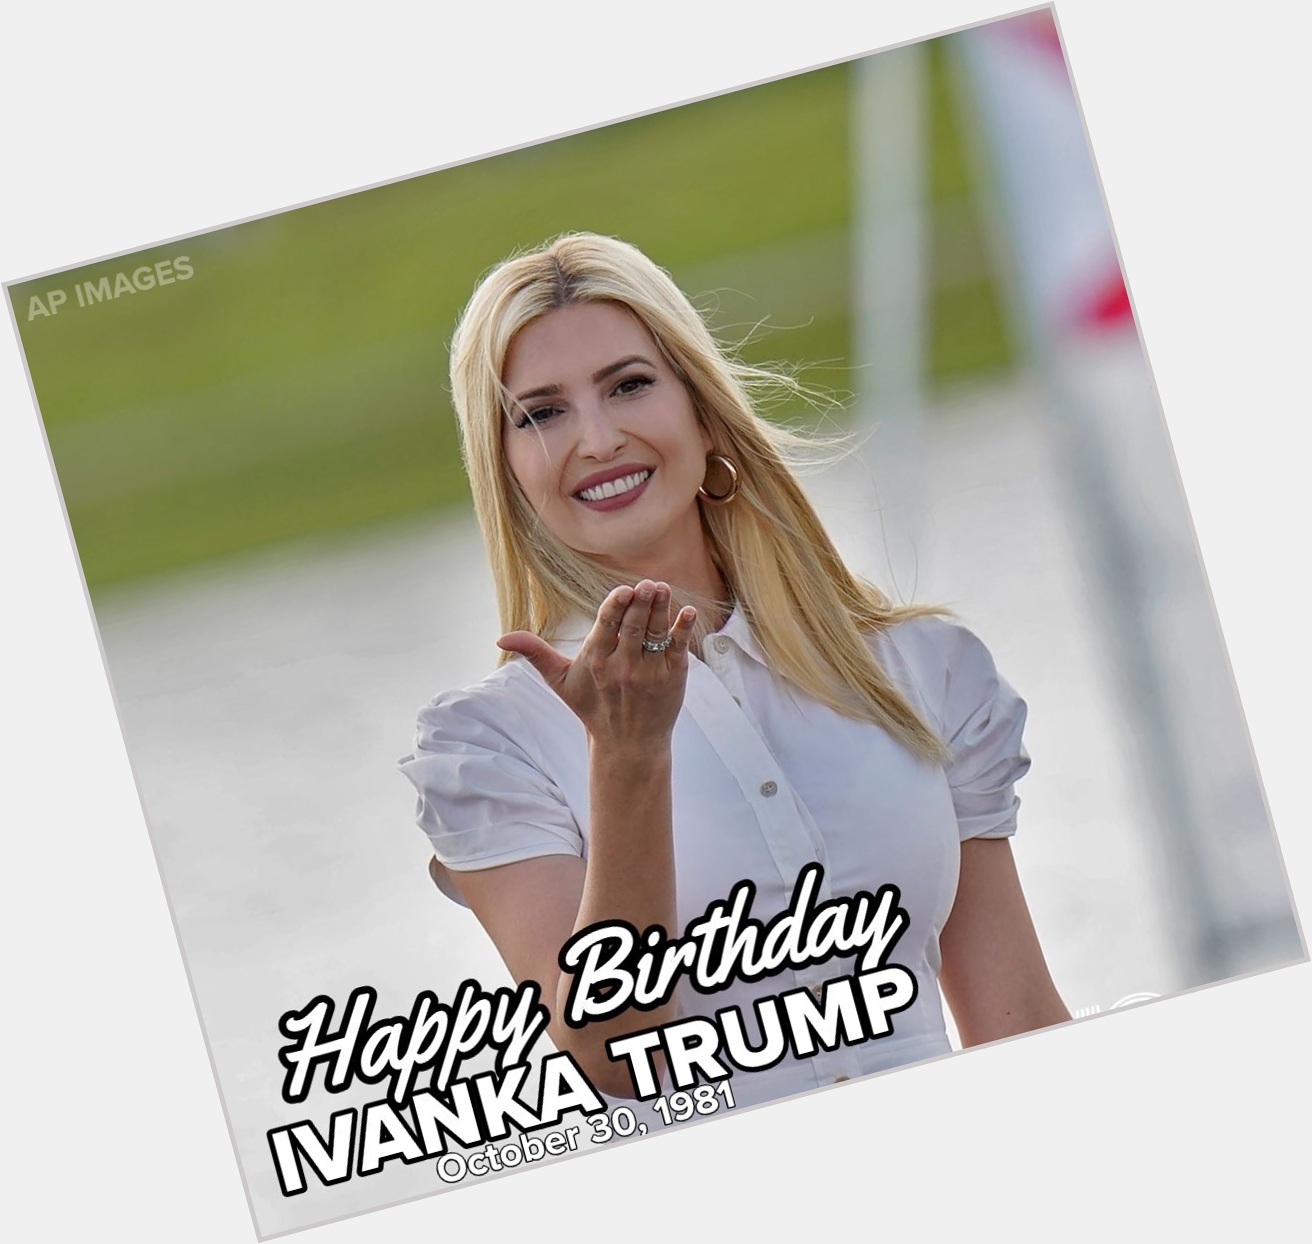 HAPPY BIRTHDAY! Today, Ivanka Trump celebrates her 39th birthday! 